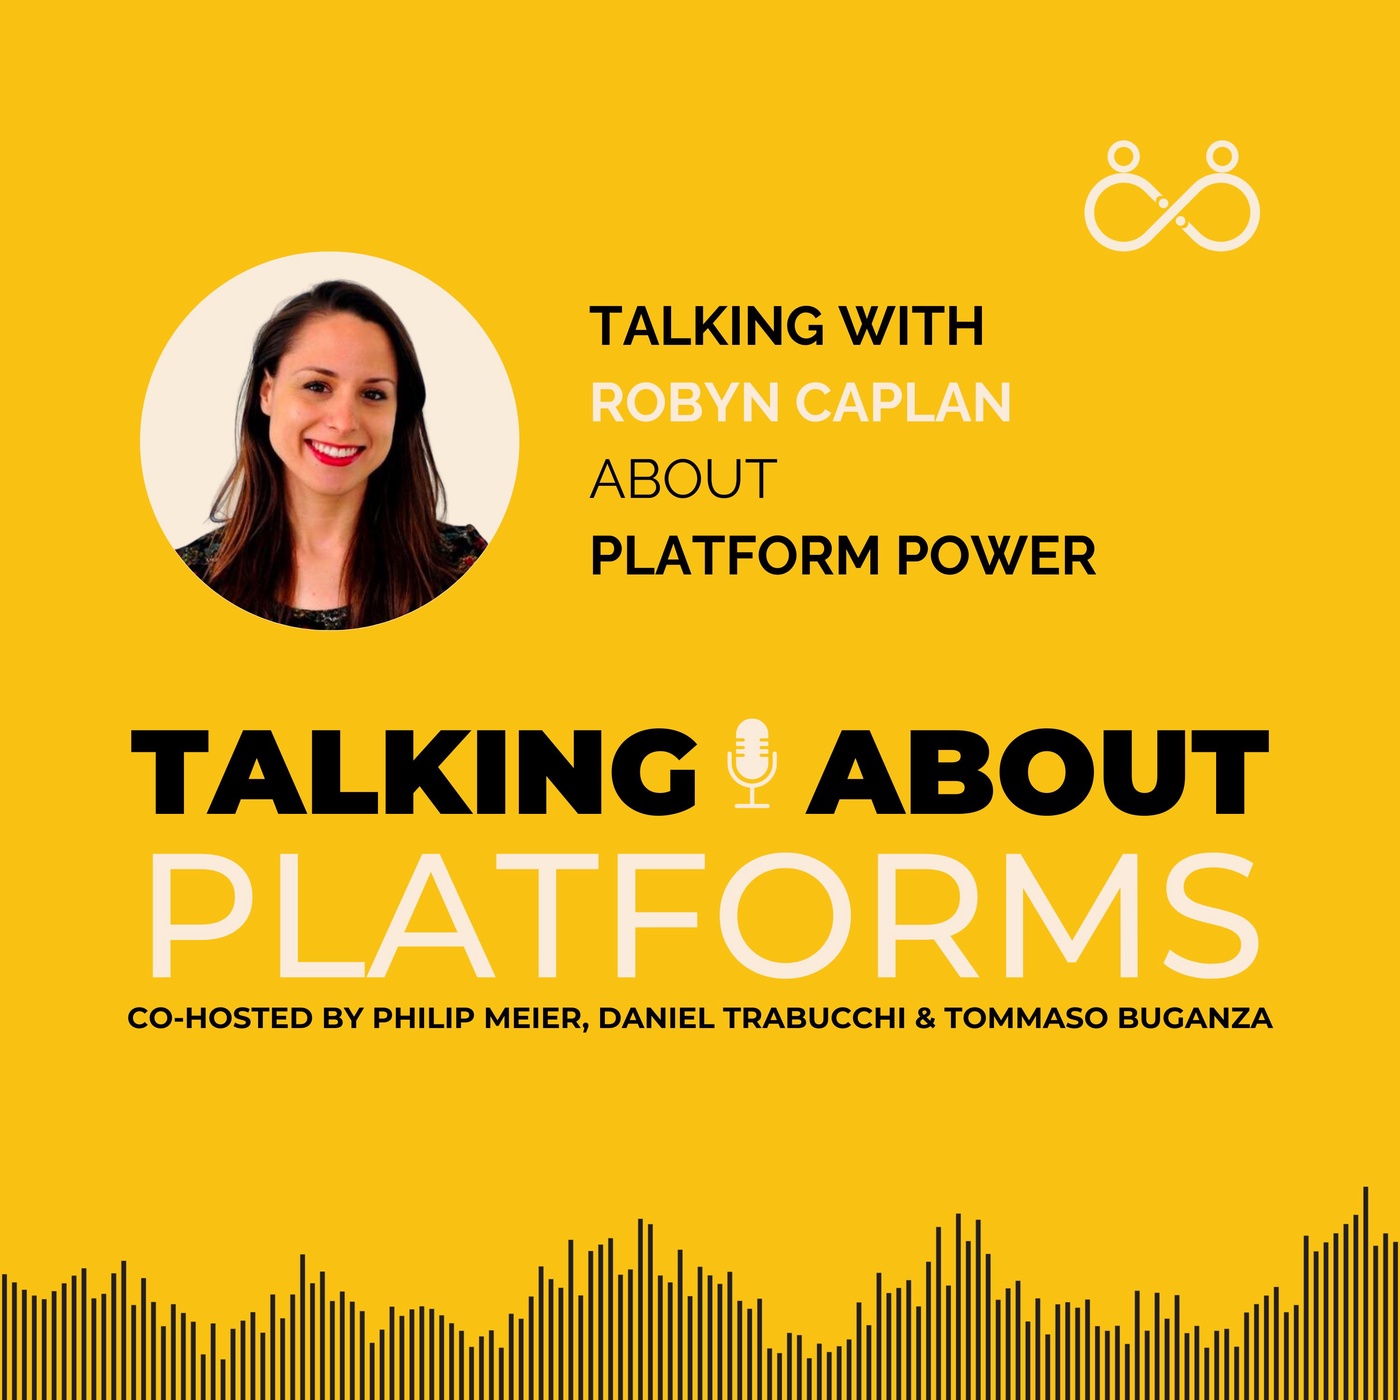 Platform power with Robyn Caplan